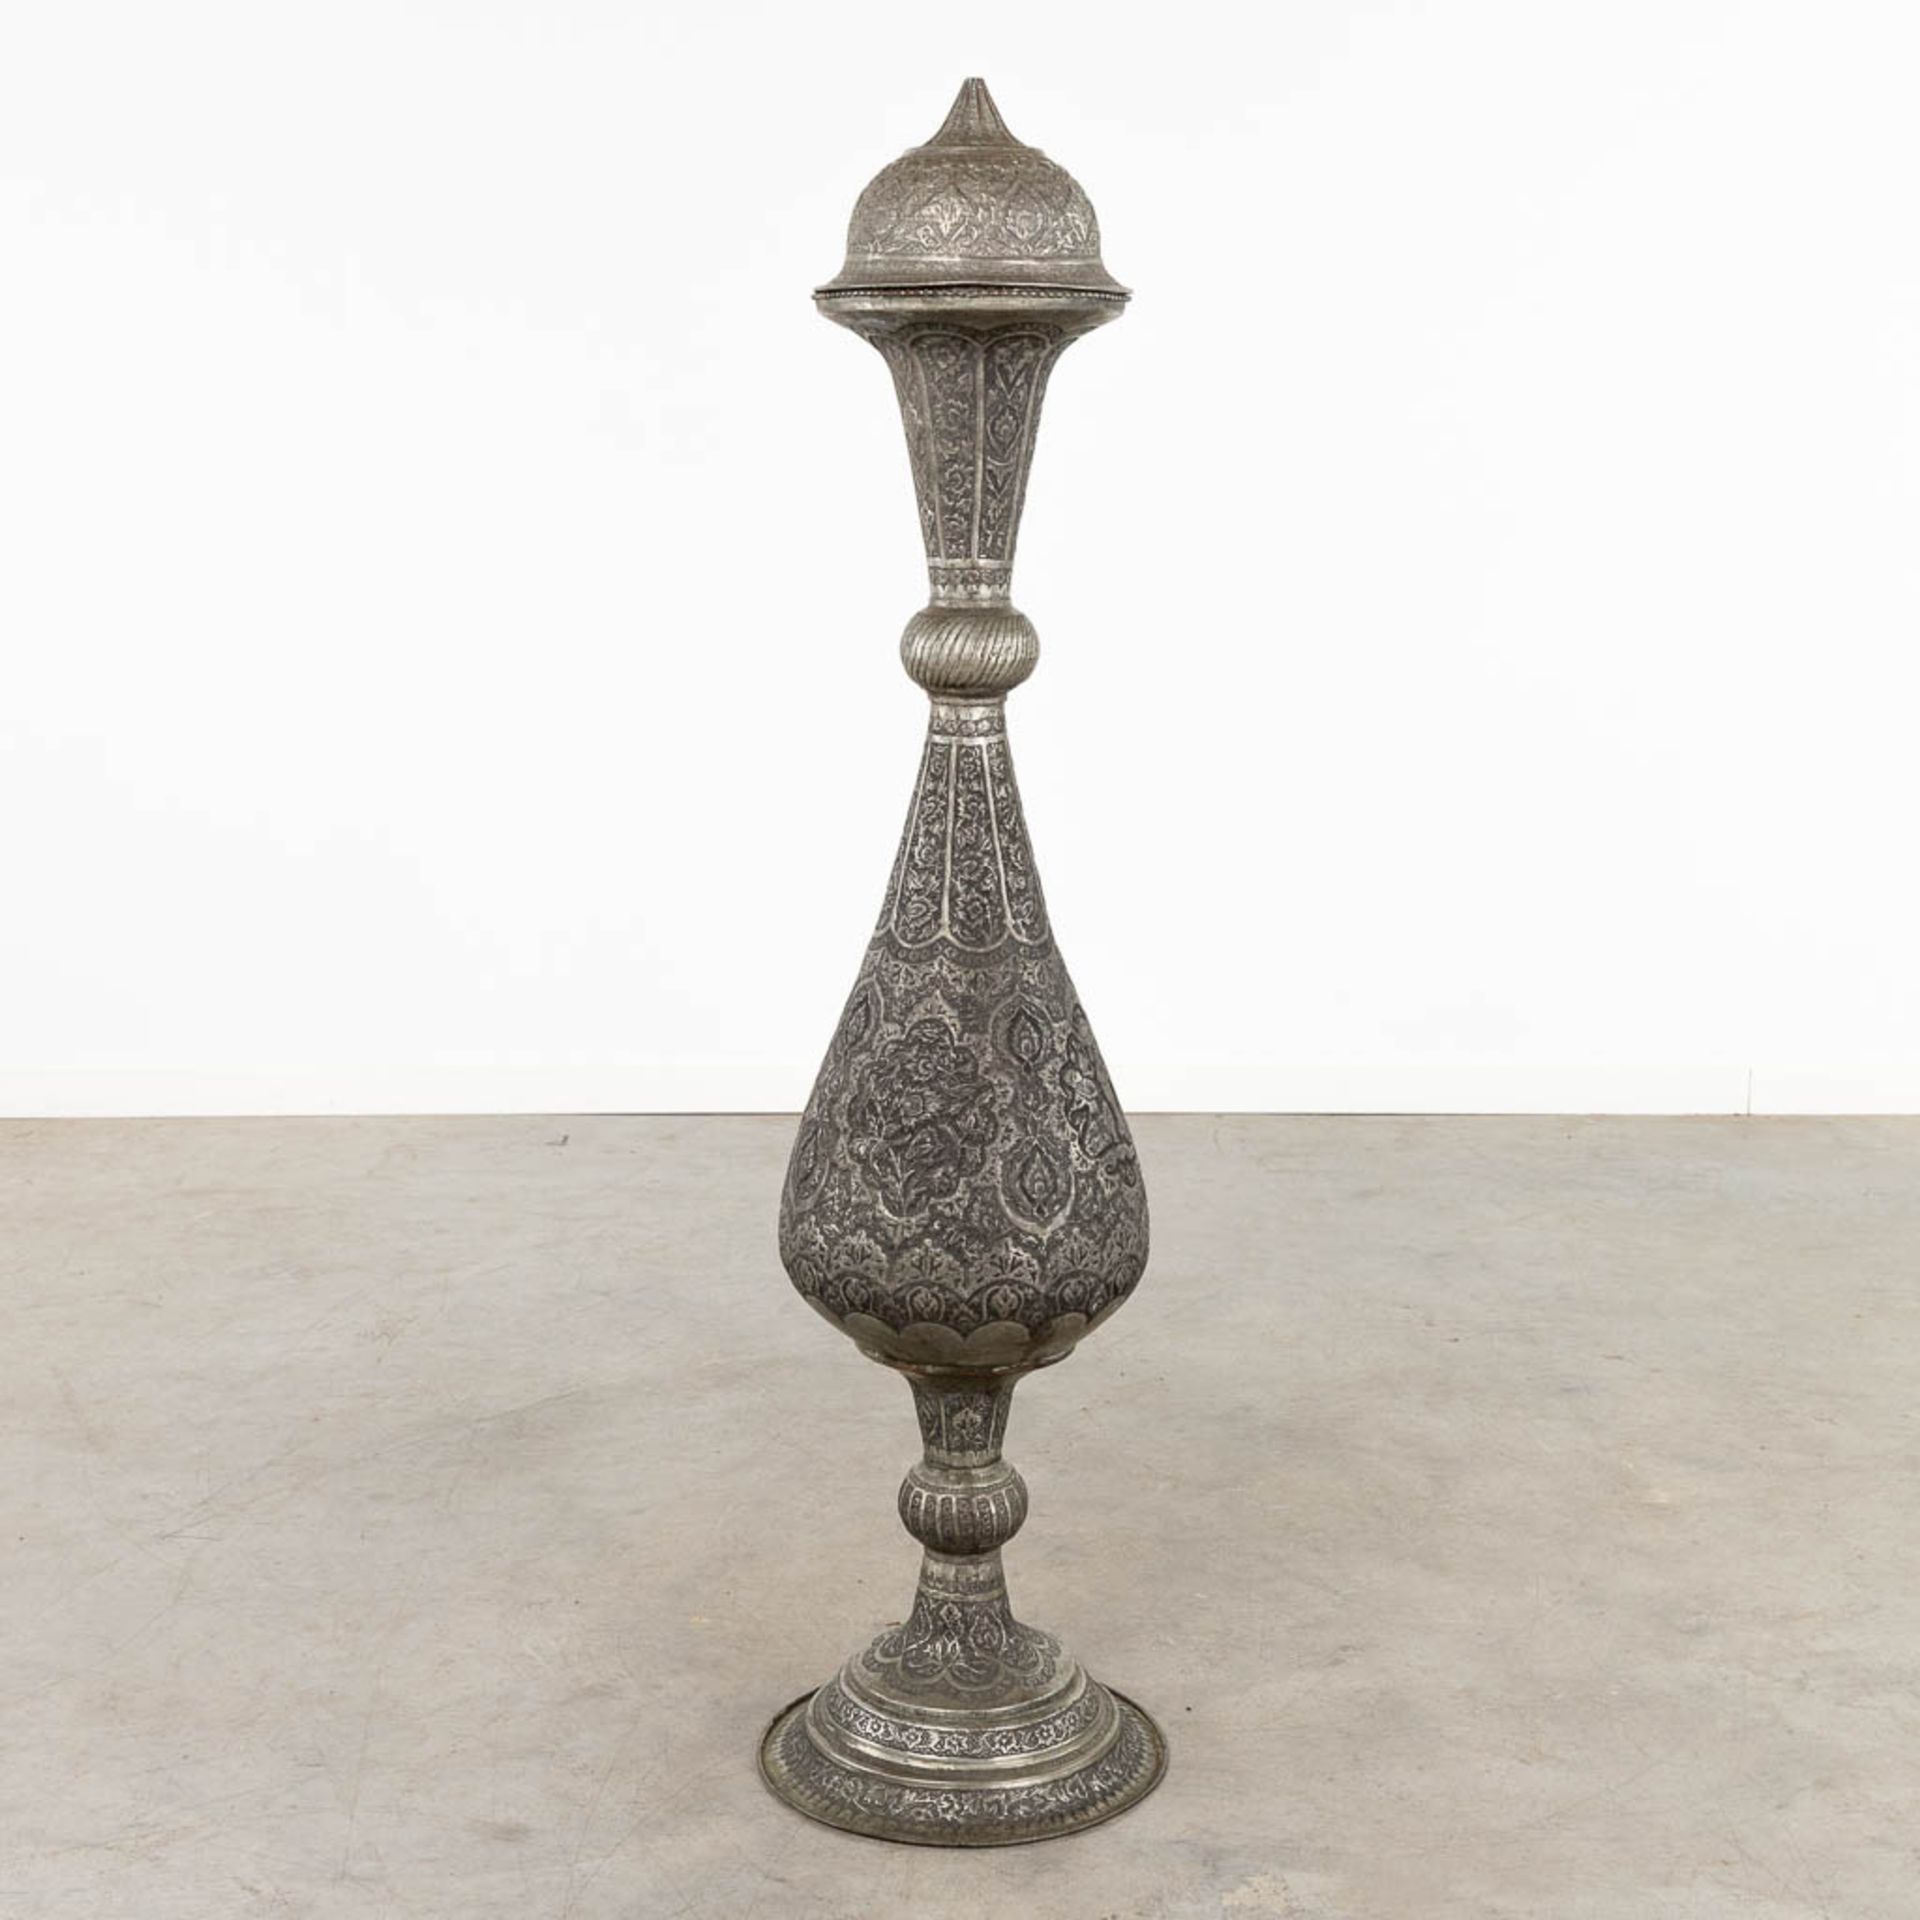 A large decorative vase, India. 19th C. (H:128 x D:32 cm) - Image 3 of 14